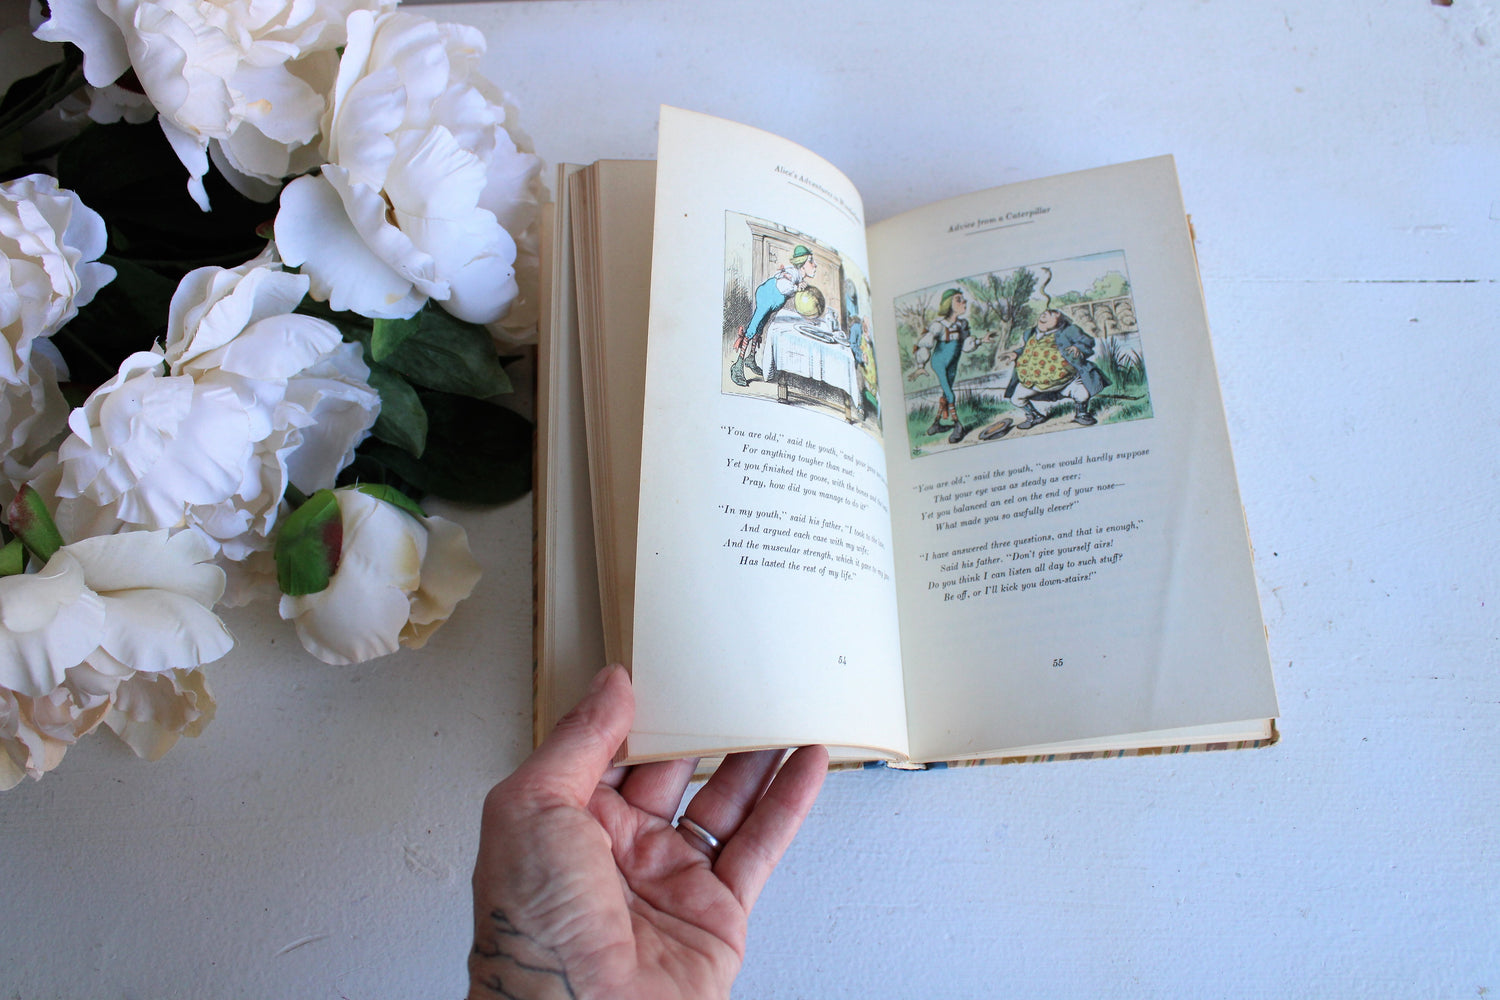 Vintage 1940s "Alice in Wonderland" Book by Lewis Carroll